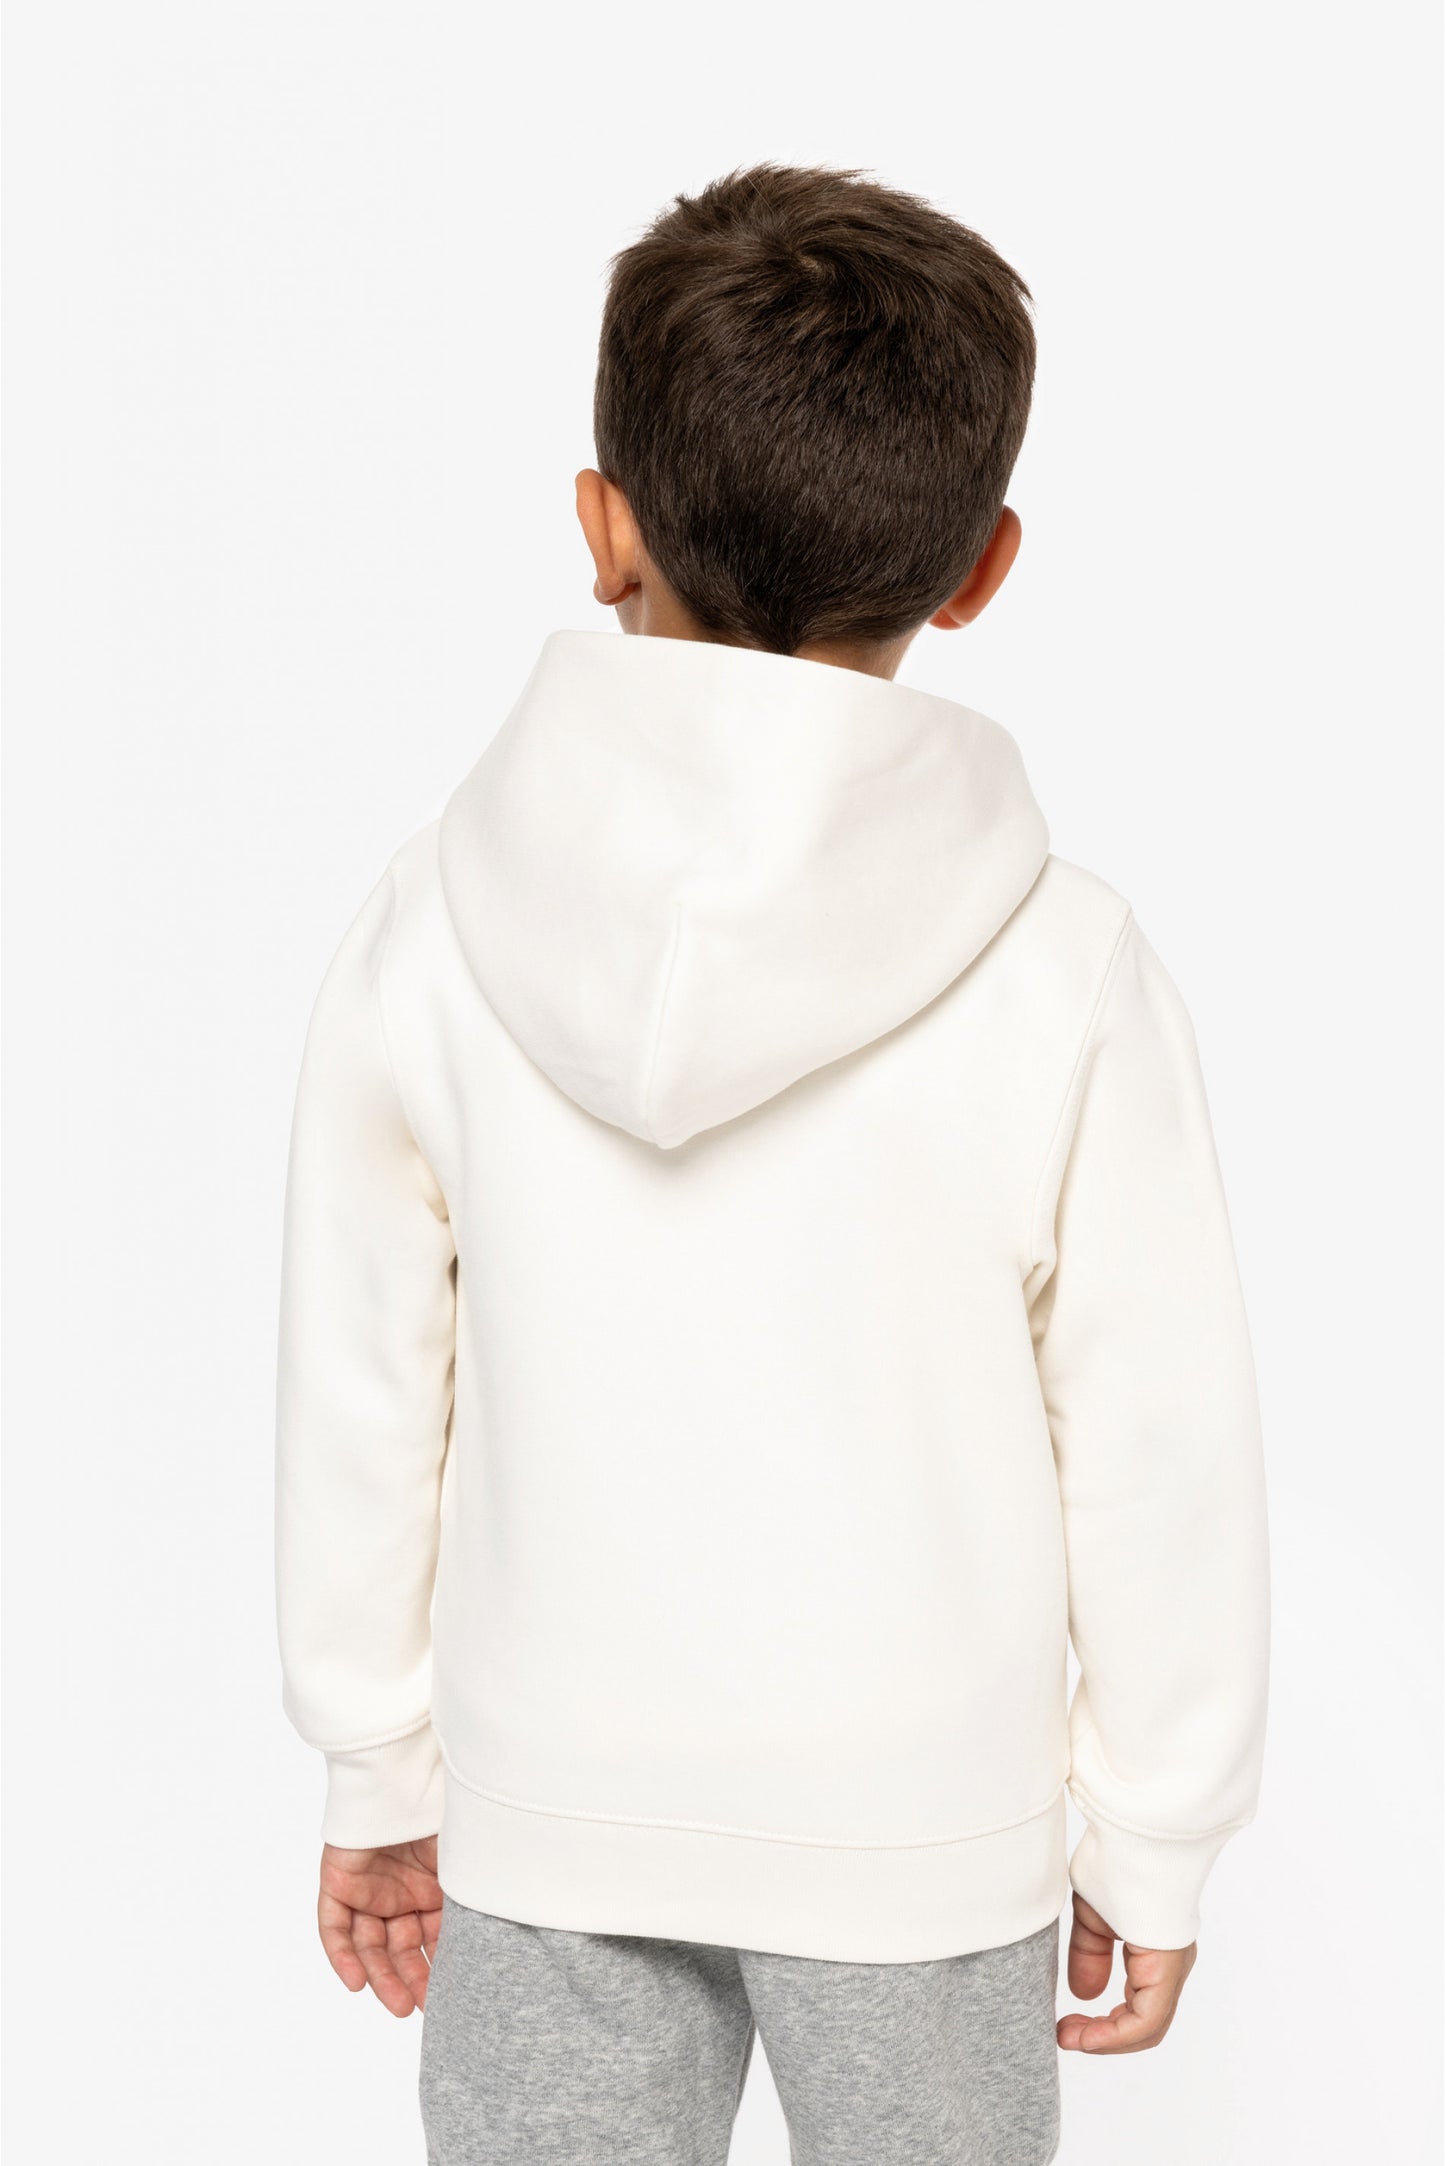 Kids hoodie 350gr - eigen ontwerp